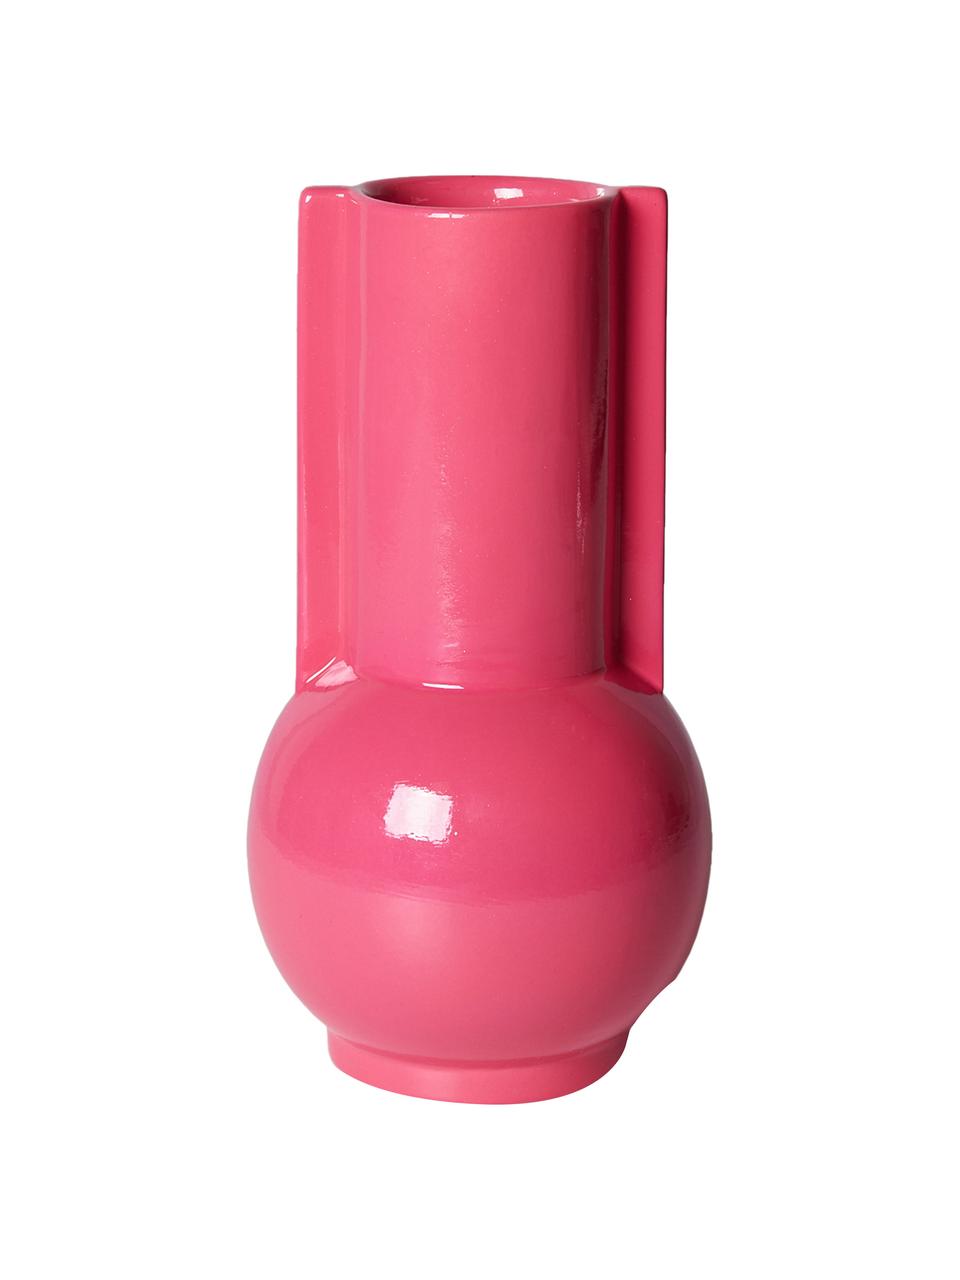 Design-Vase Rapunzel, Keramik, Pink, Ø 11 x H 20 cm